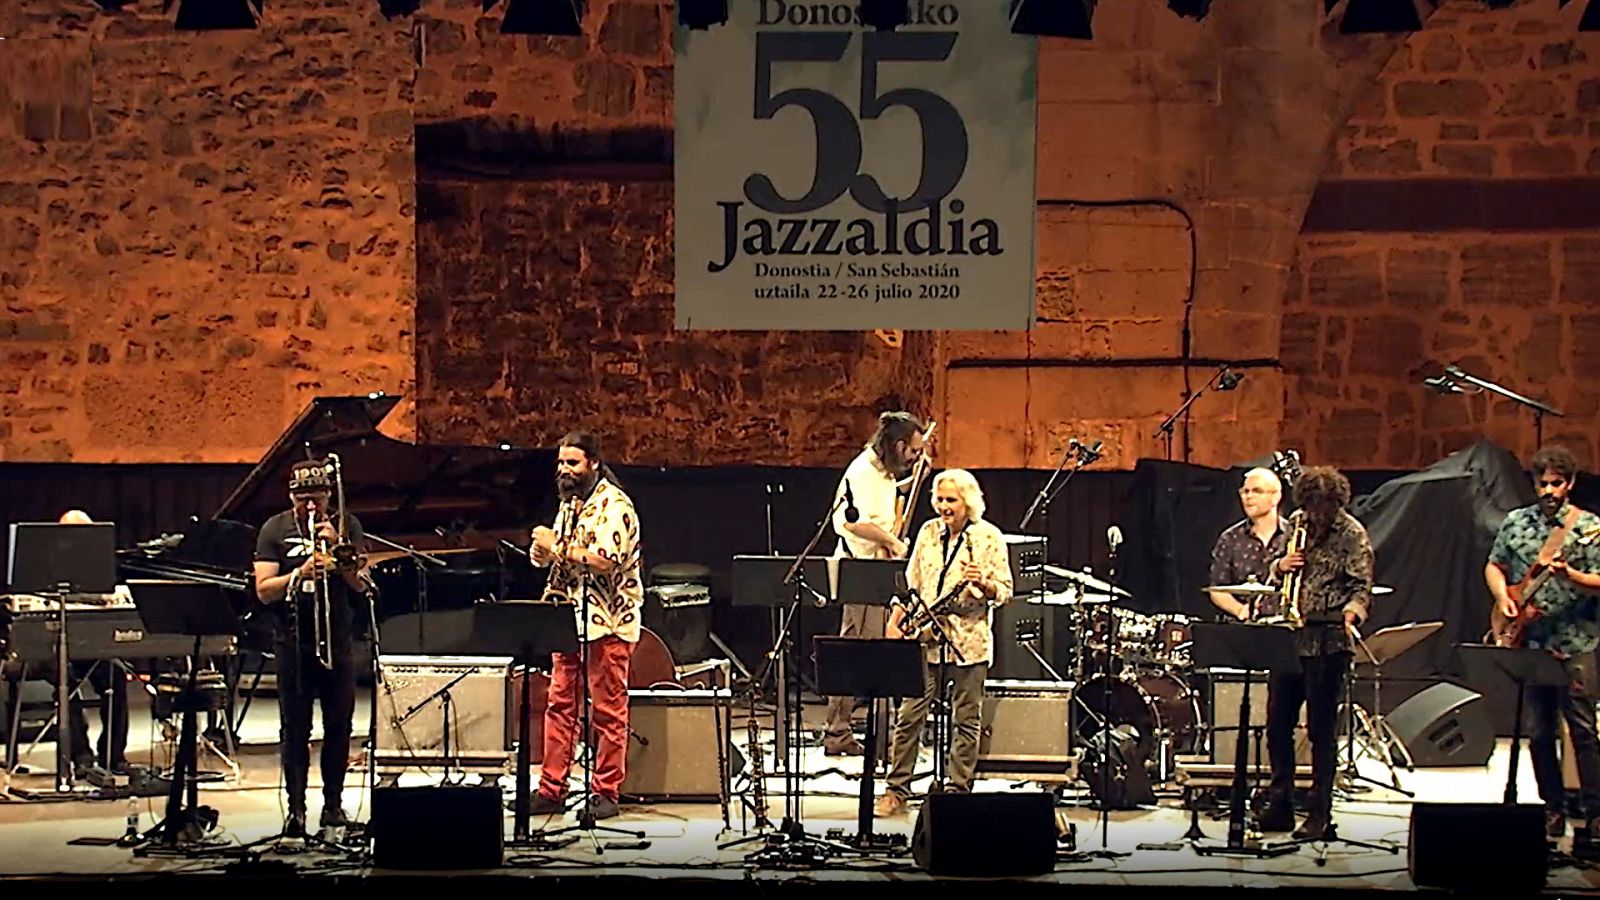 Festivales de verano de La 2 - 55º Jazzaldia: Perico Sambeat "Plays Zappa"